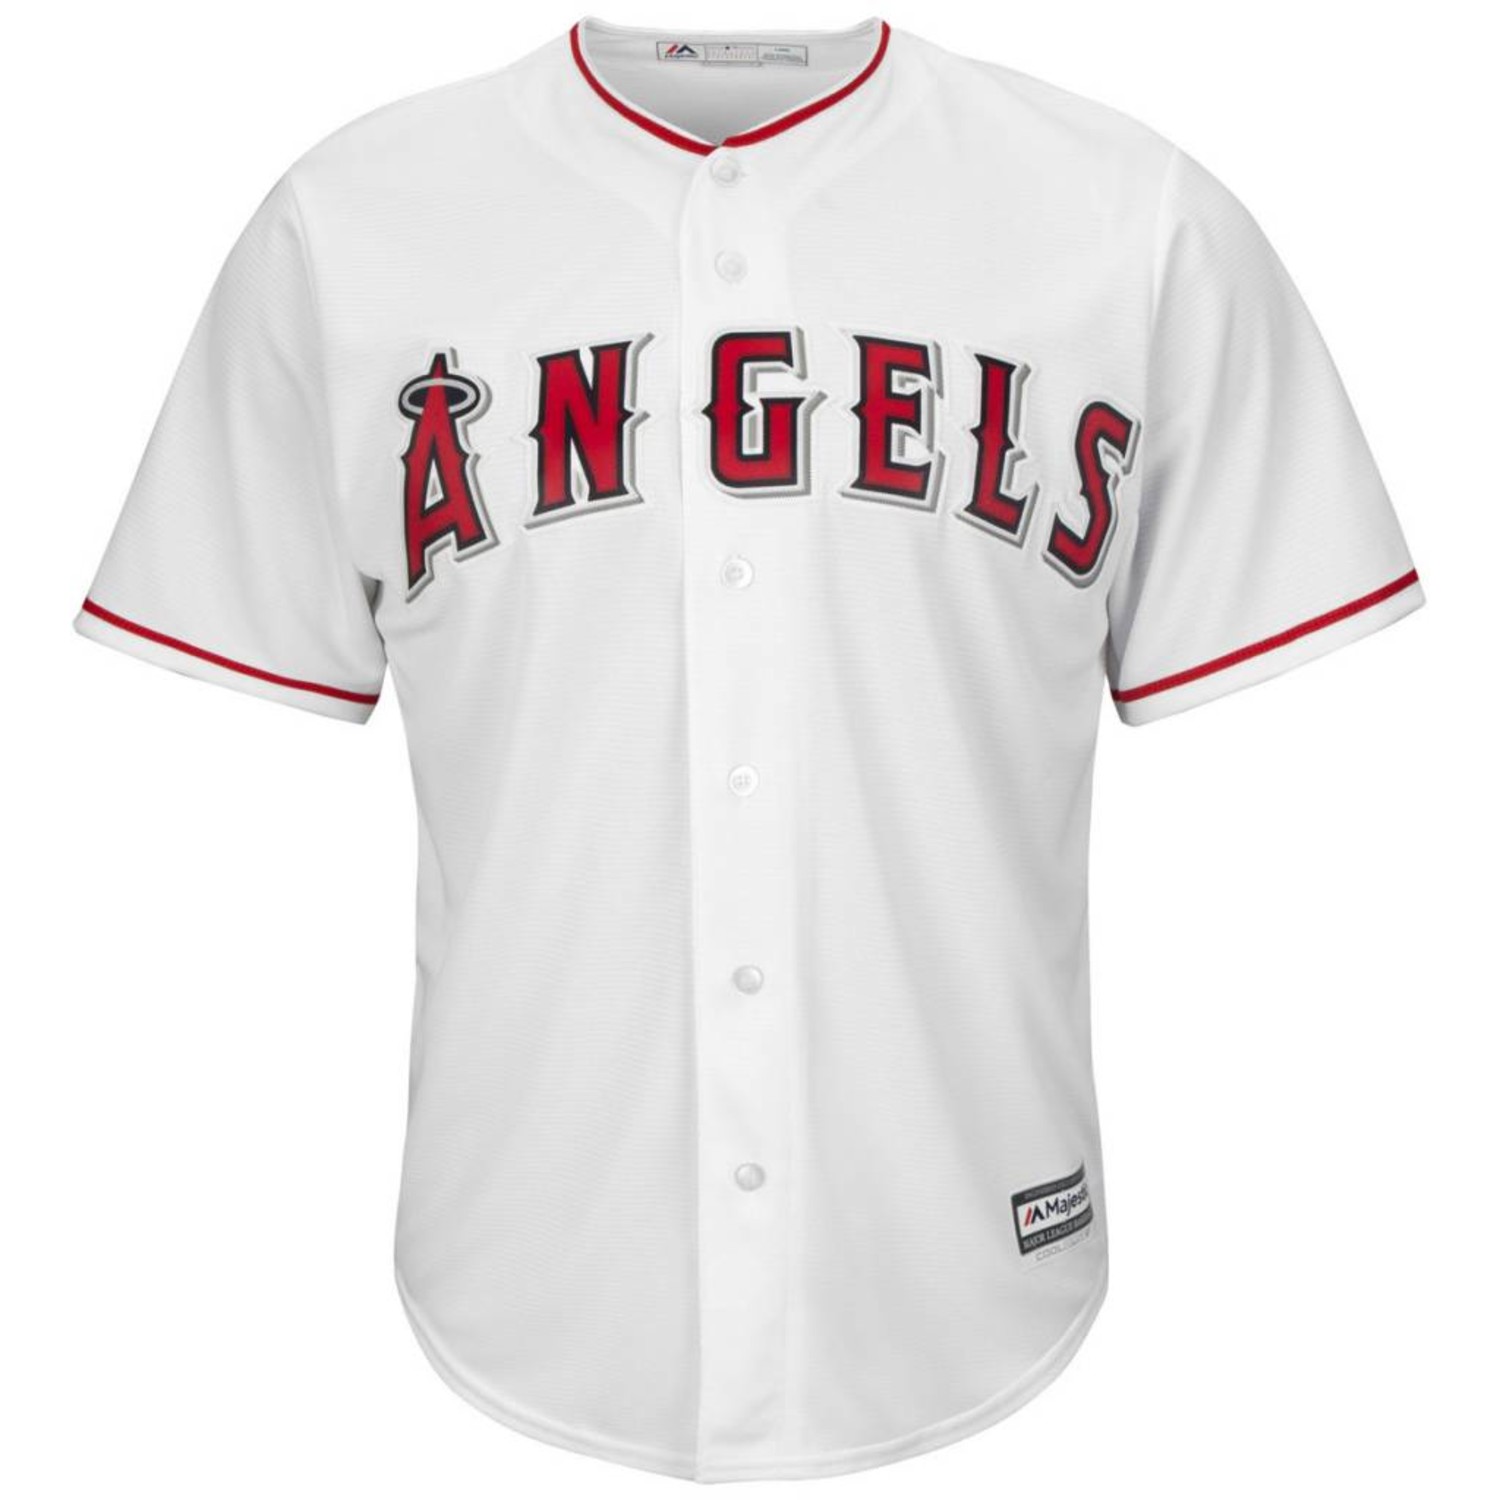 Los Angeles Angels Jerseys in Los Angeles Angels Team Shop